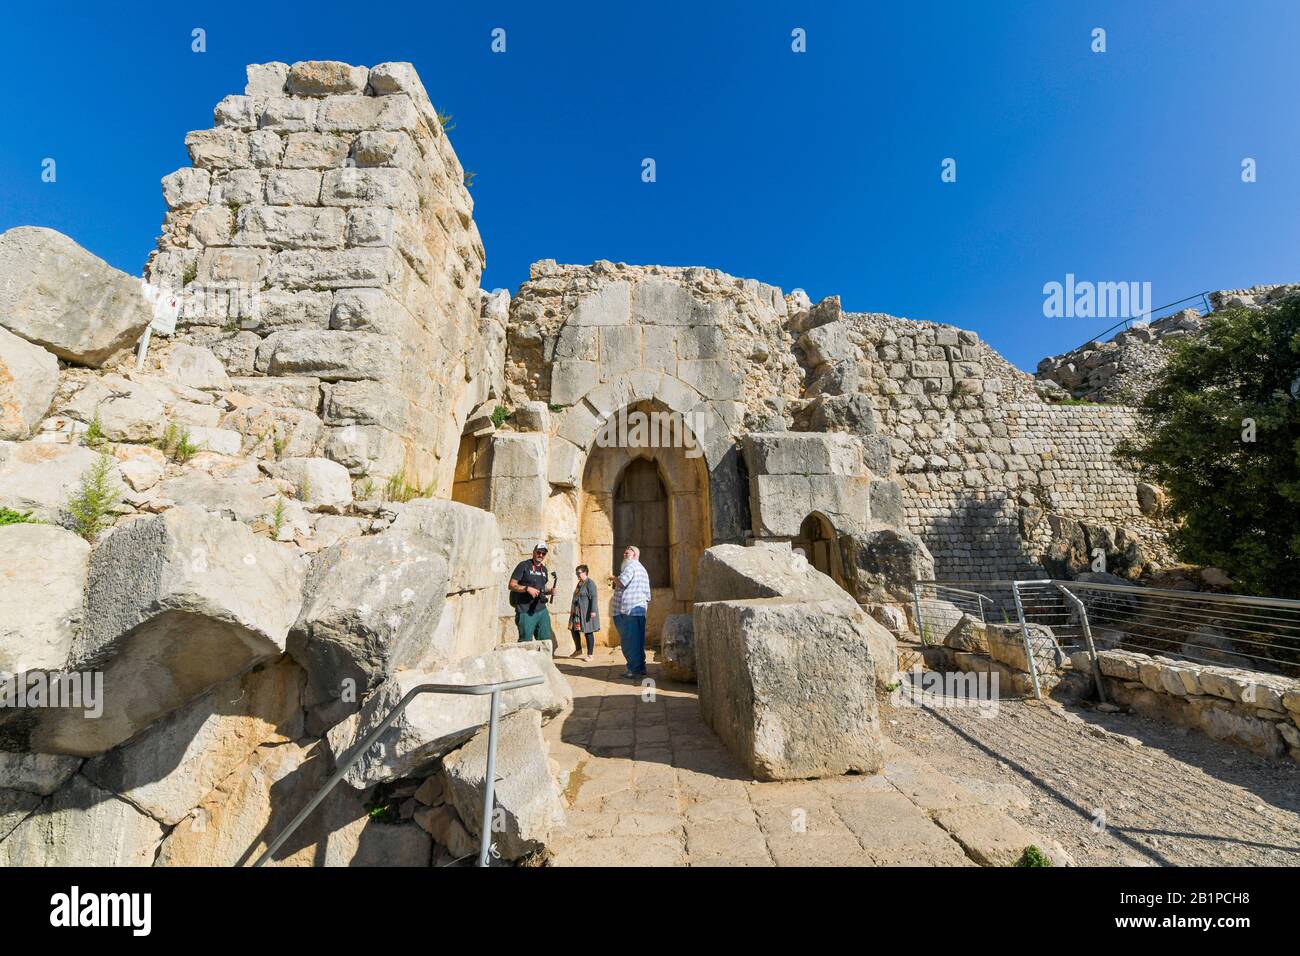 Ruinen, Festung Nimrod, Golanhöhen, Israel Stock Photo